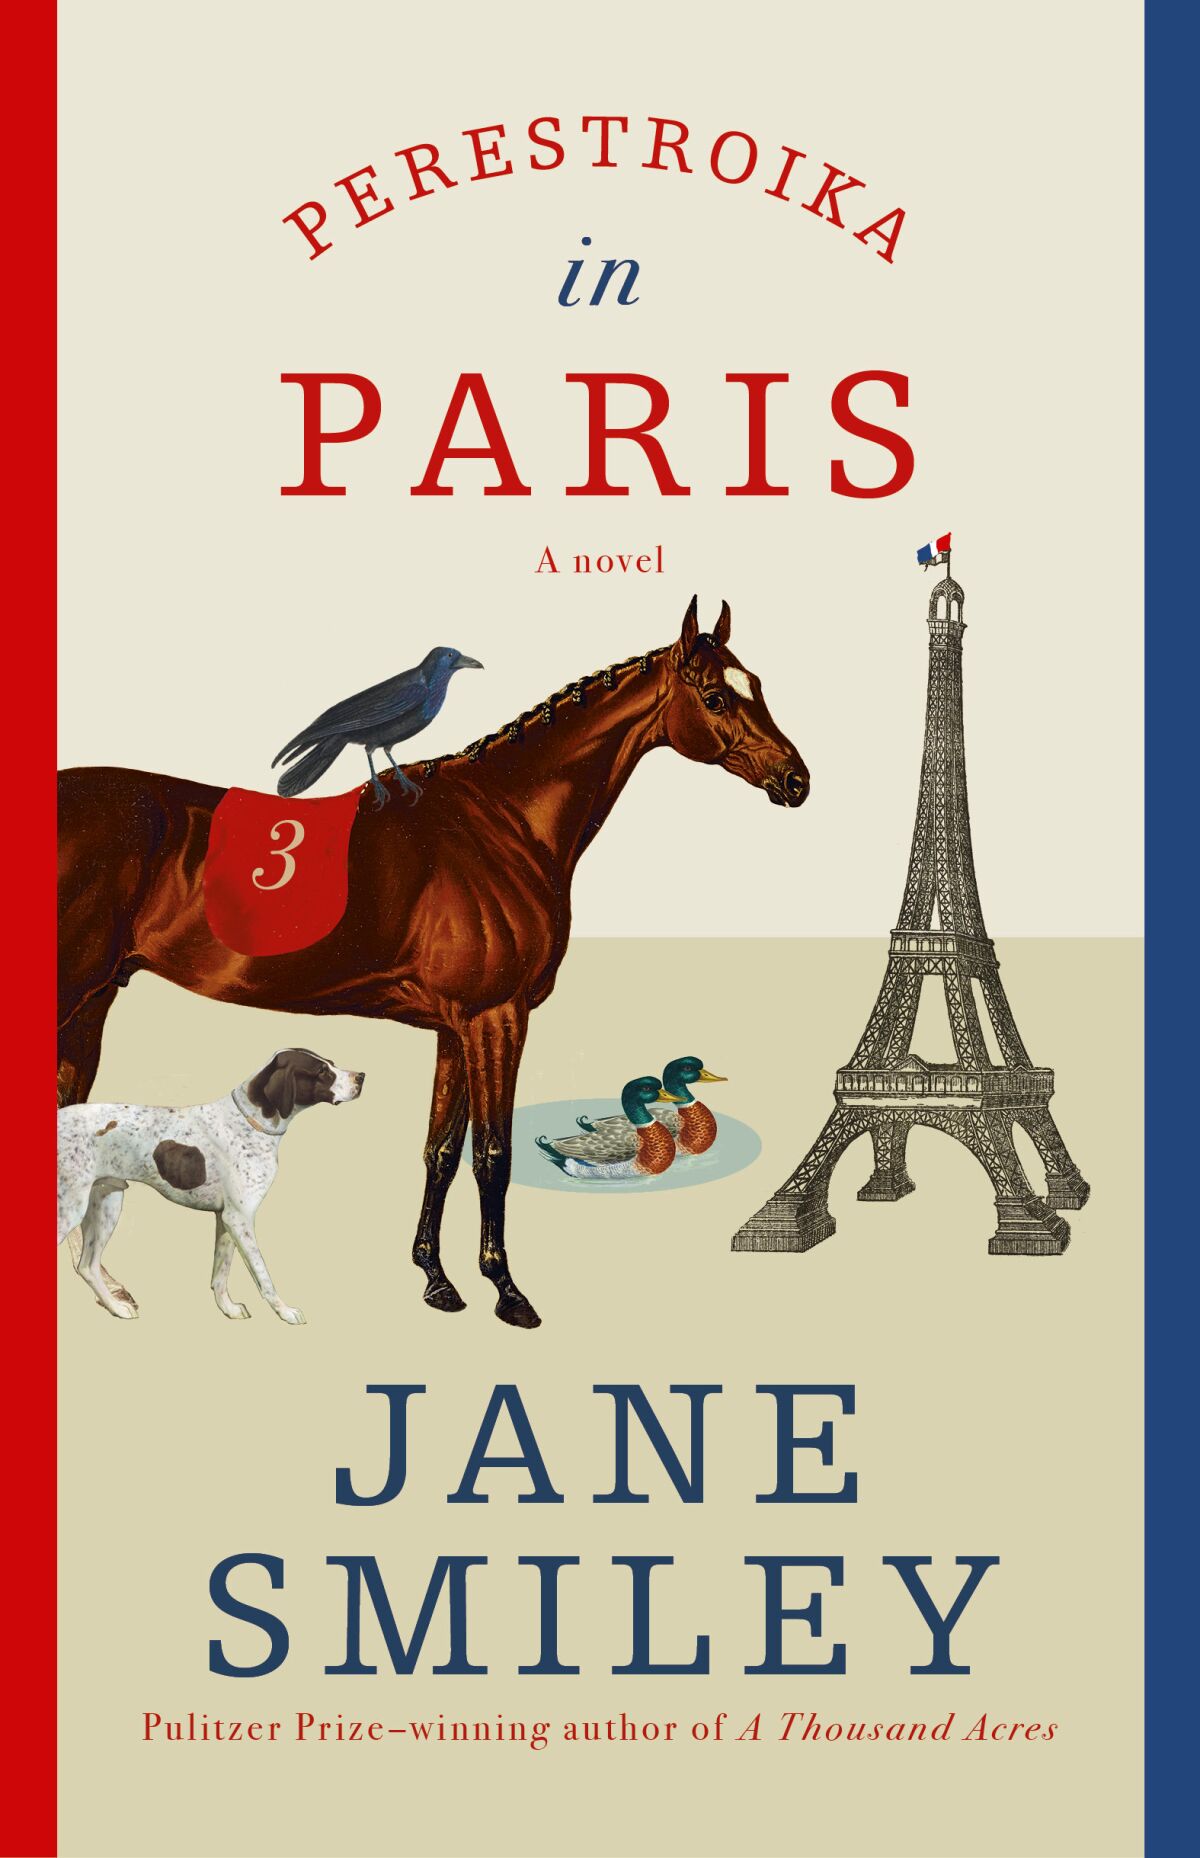 "Perestroika in Paris" by author Jane Smiley.